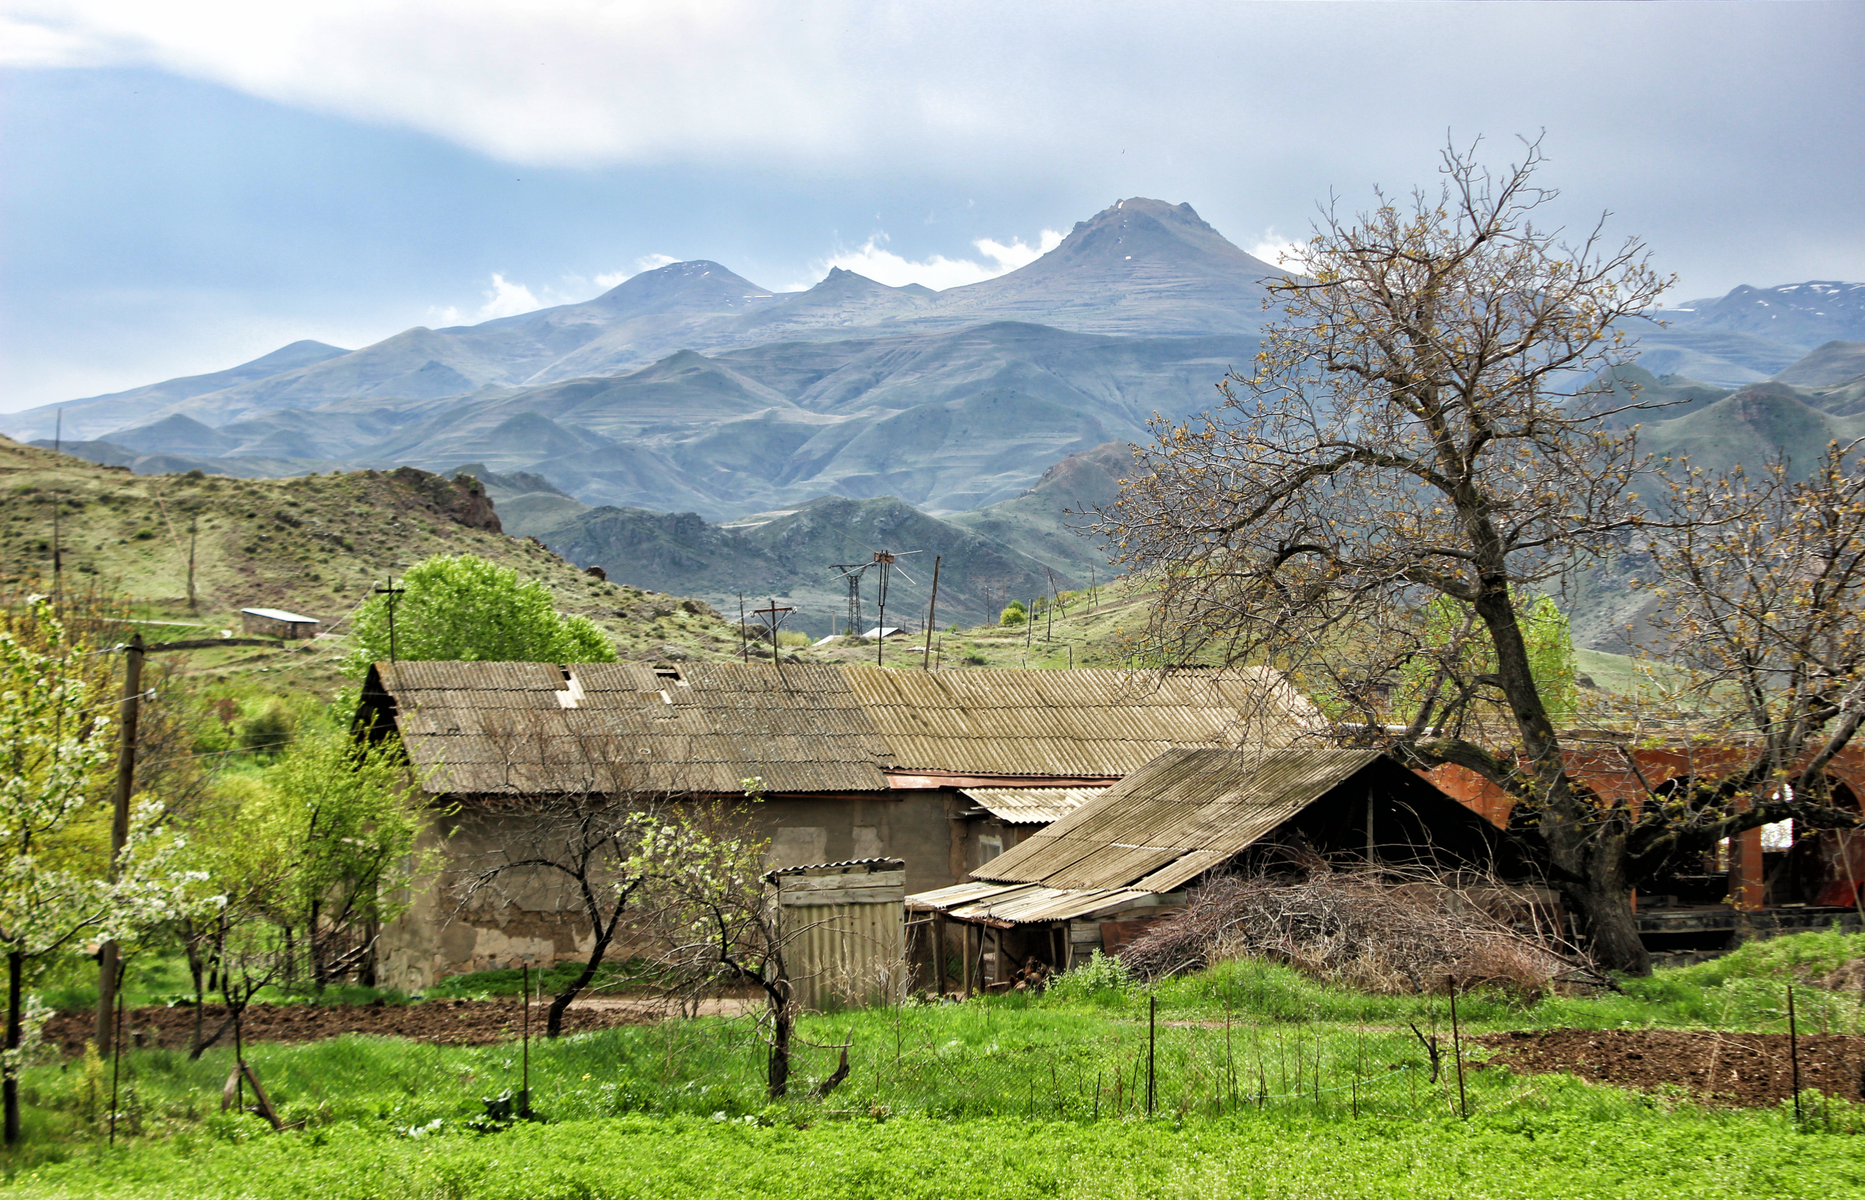 Mount Harsnakar, as seen from the town of Yeghegnadzor © Beko